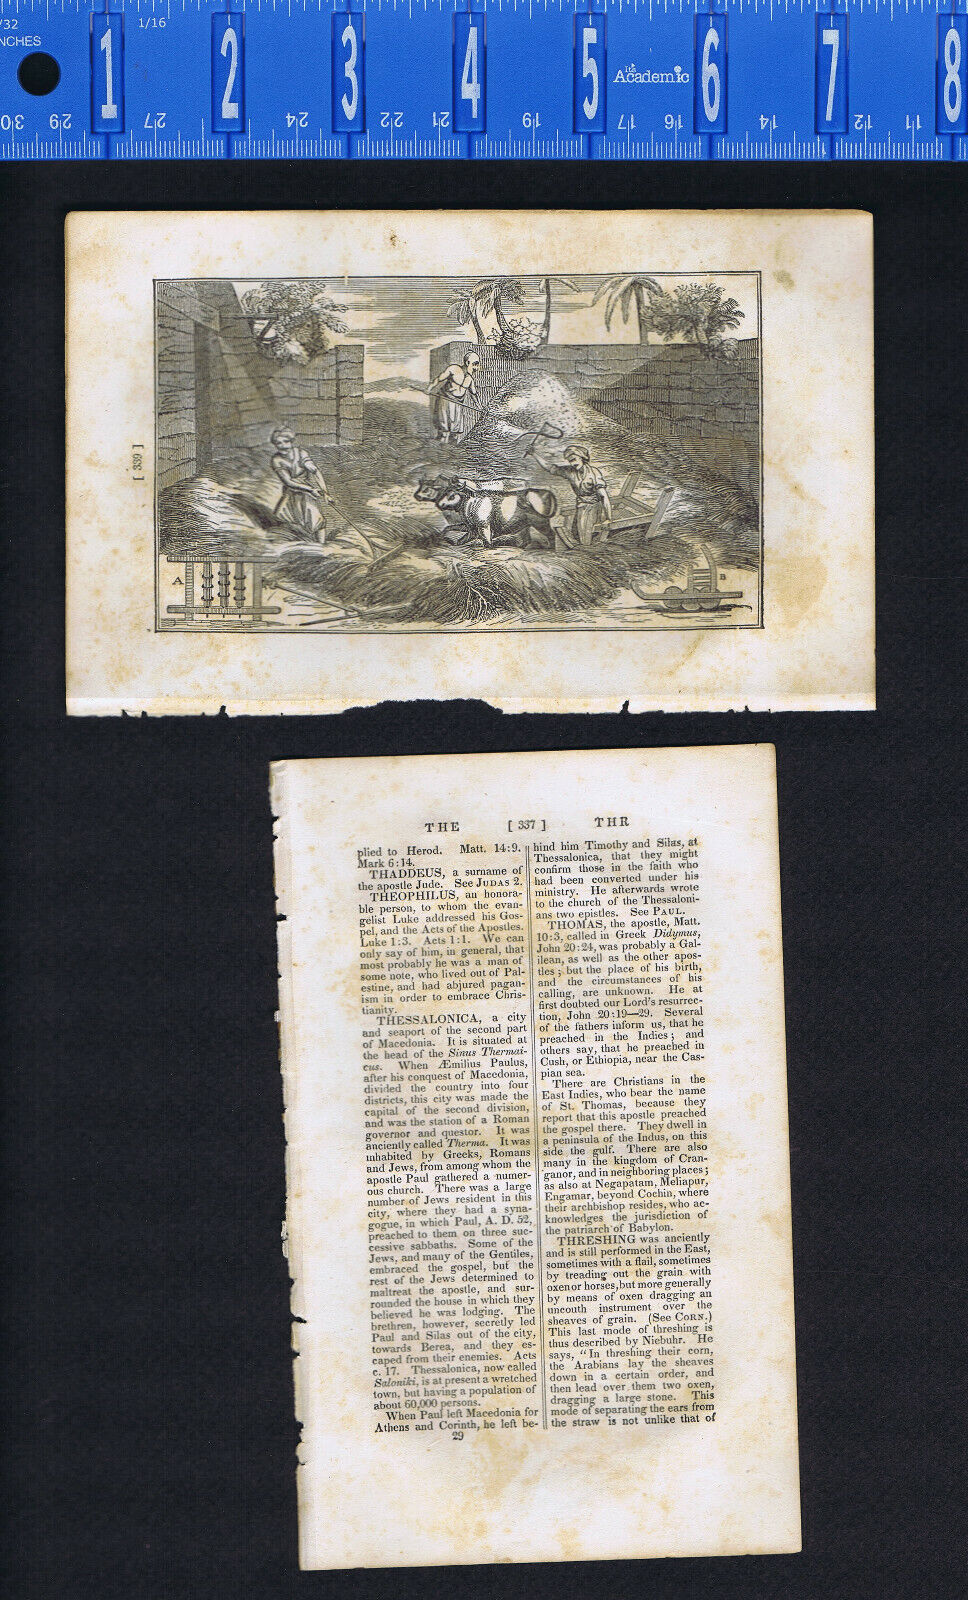 1833 Biblical Description of Threshing with Engraving